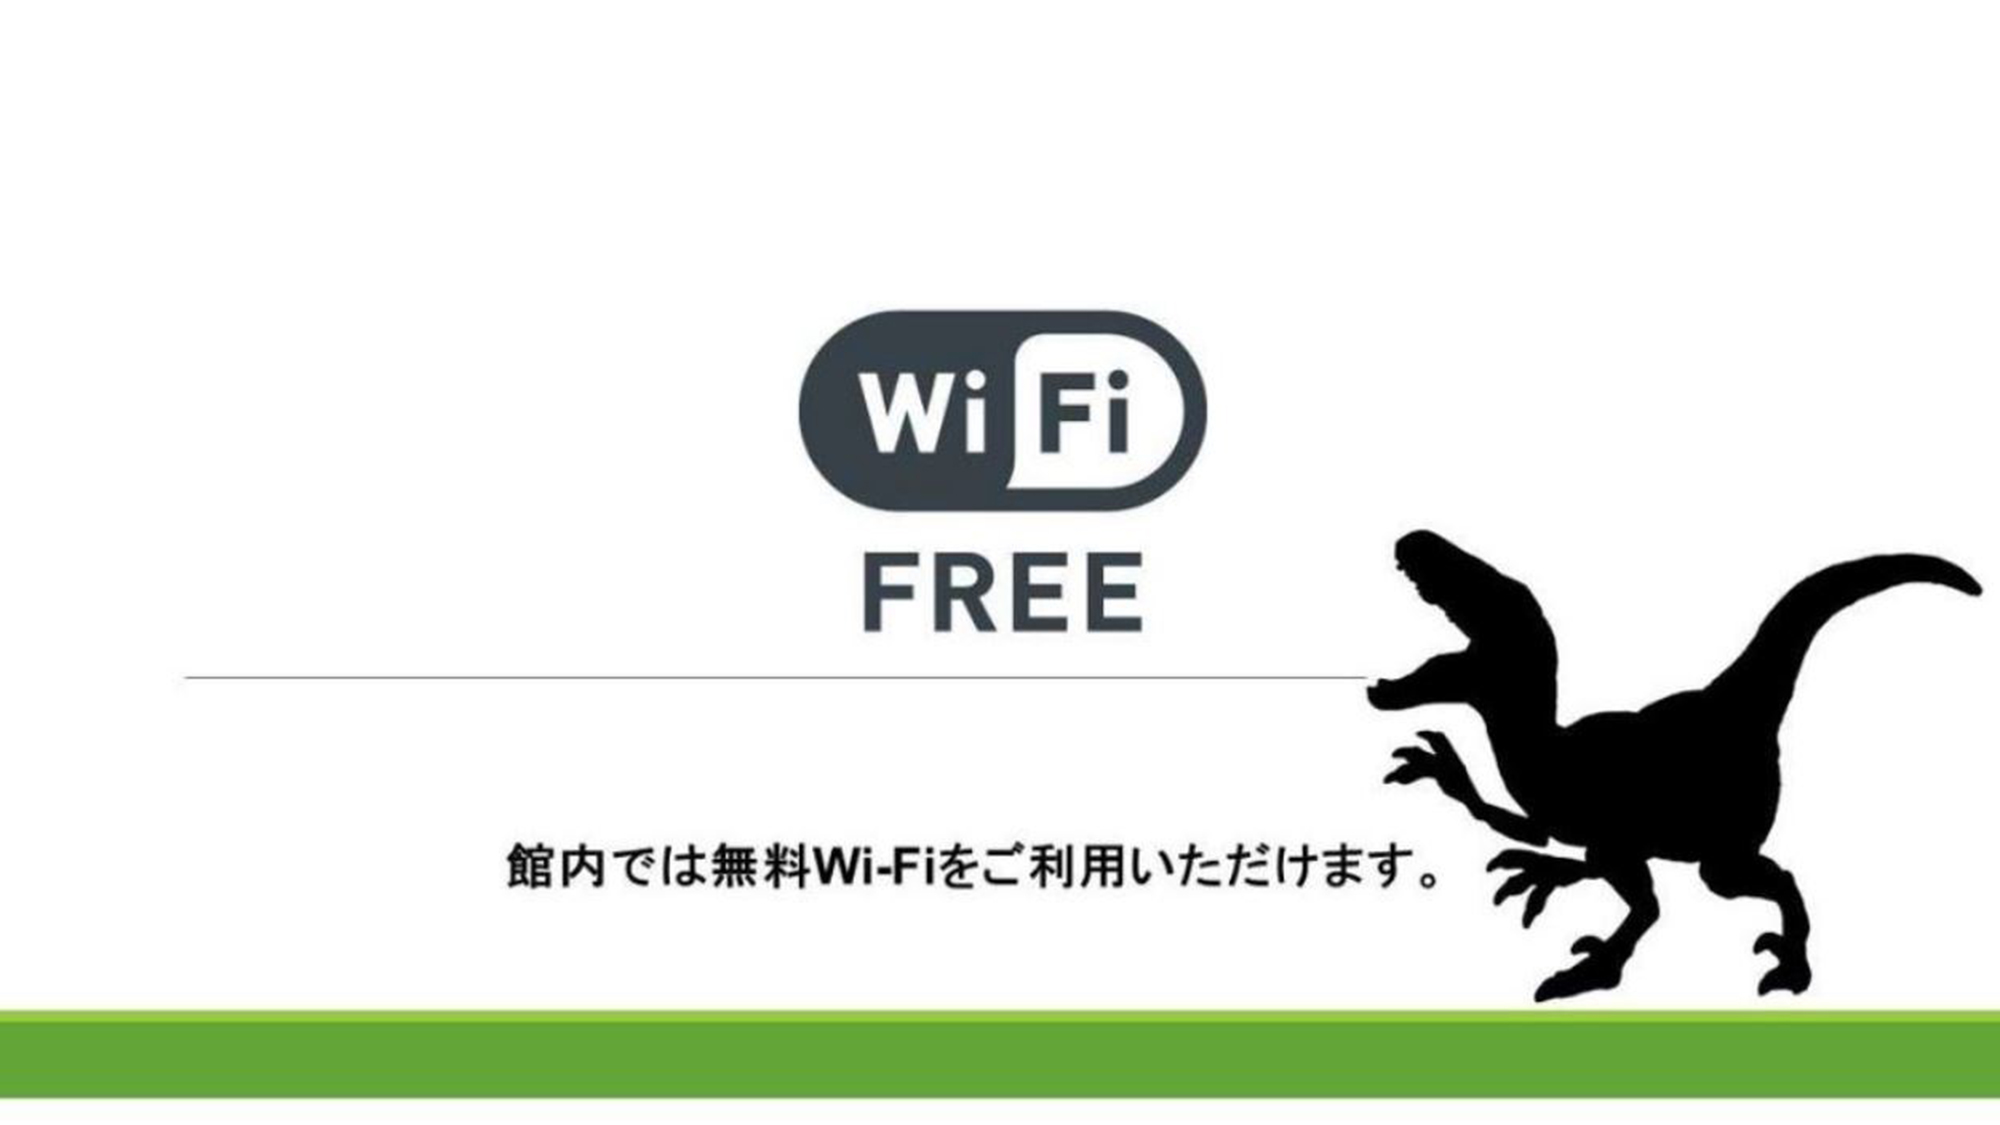 ◆Free Wi-Fi◆館内では無料Wi-Fiをご利用いただけます。